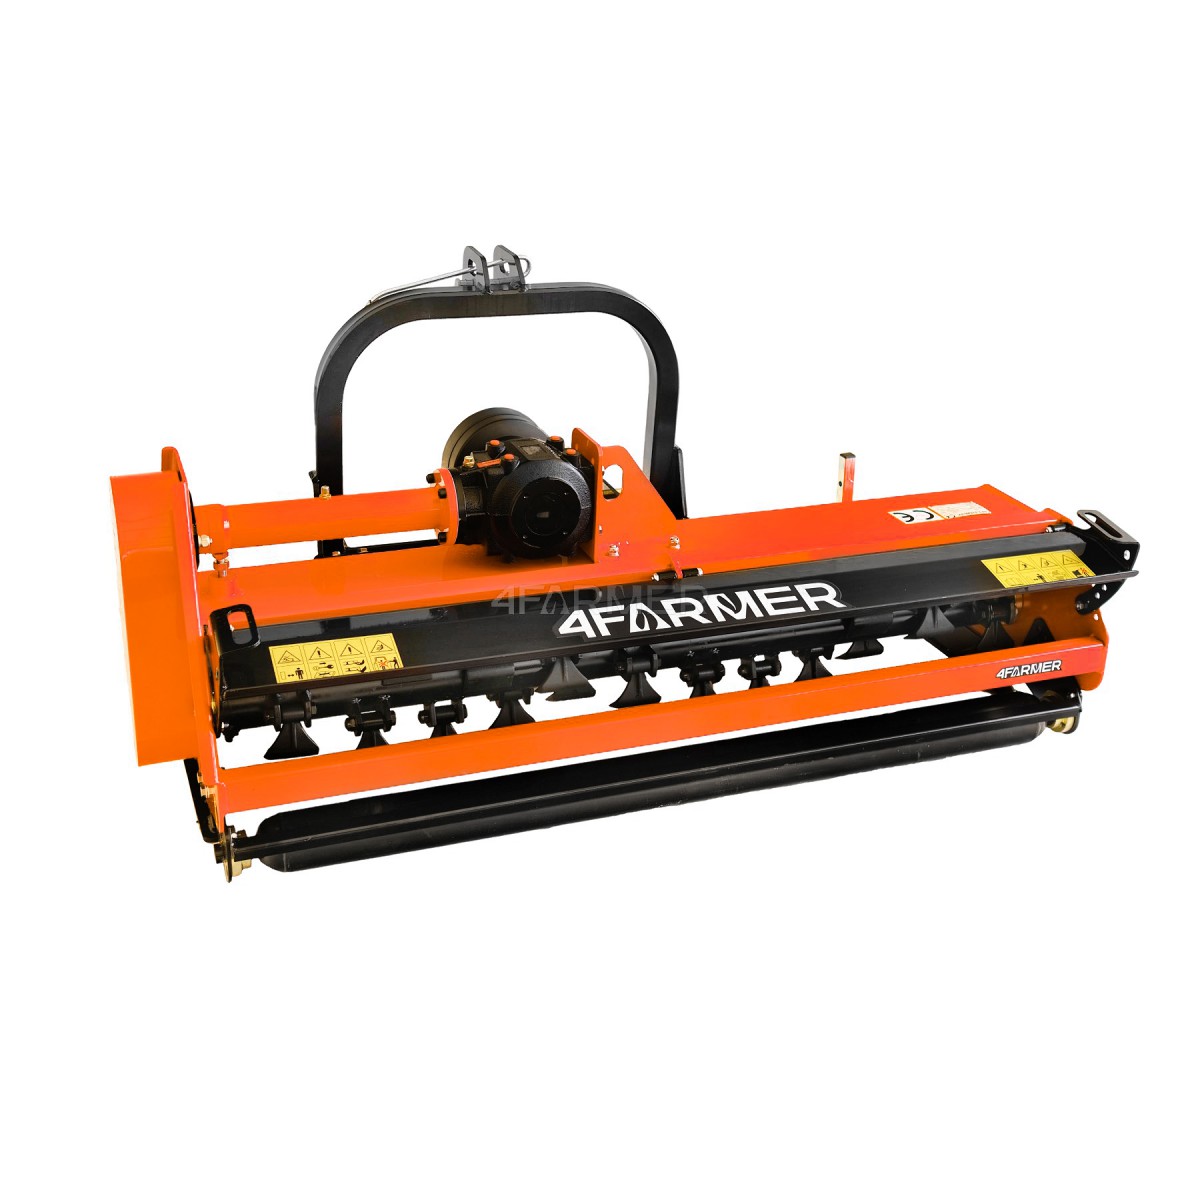 EFGC 145D 4FARMER flail mower - orange